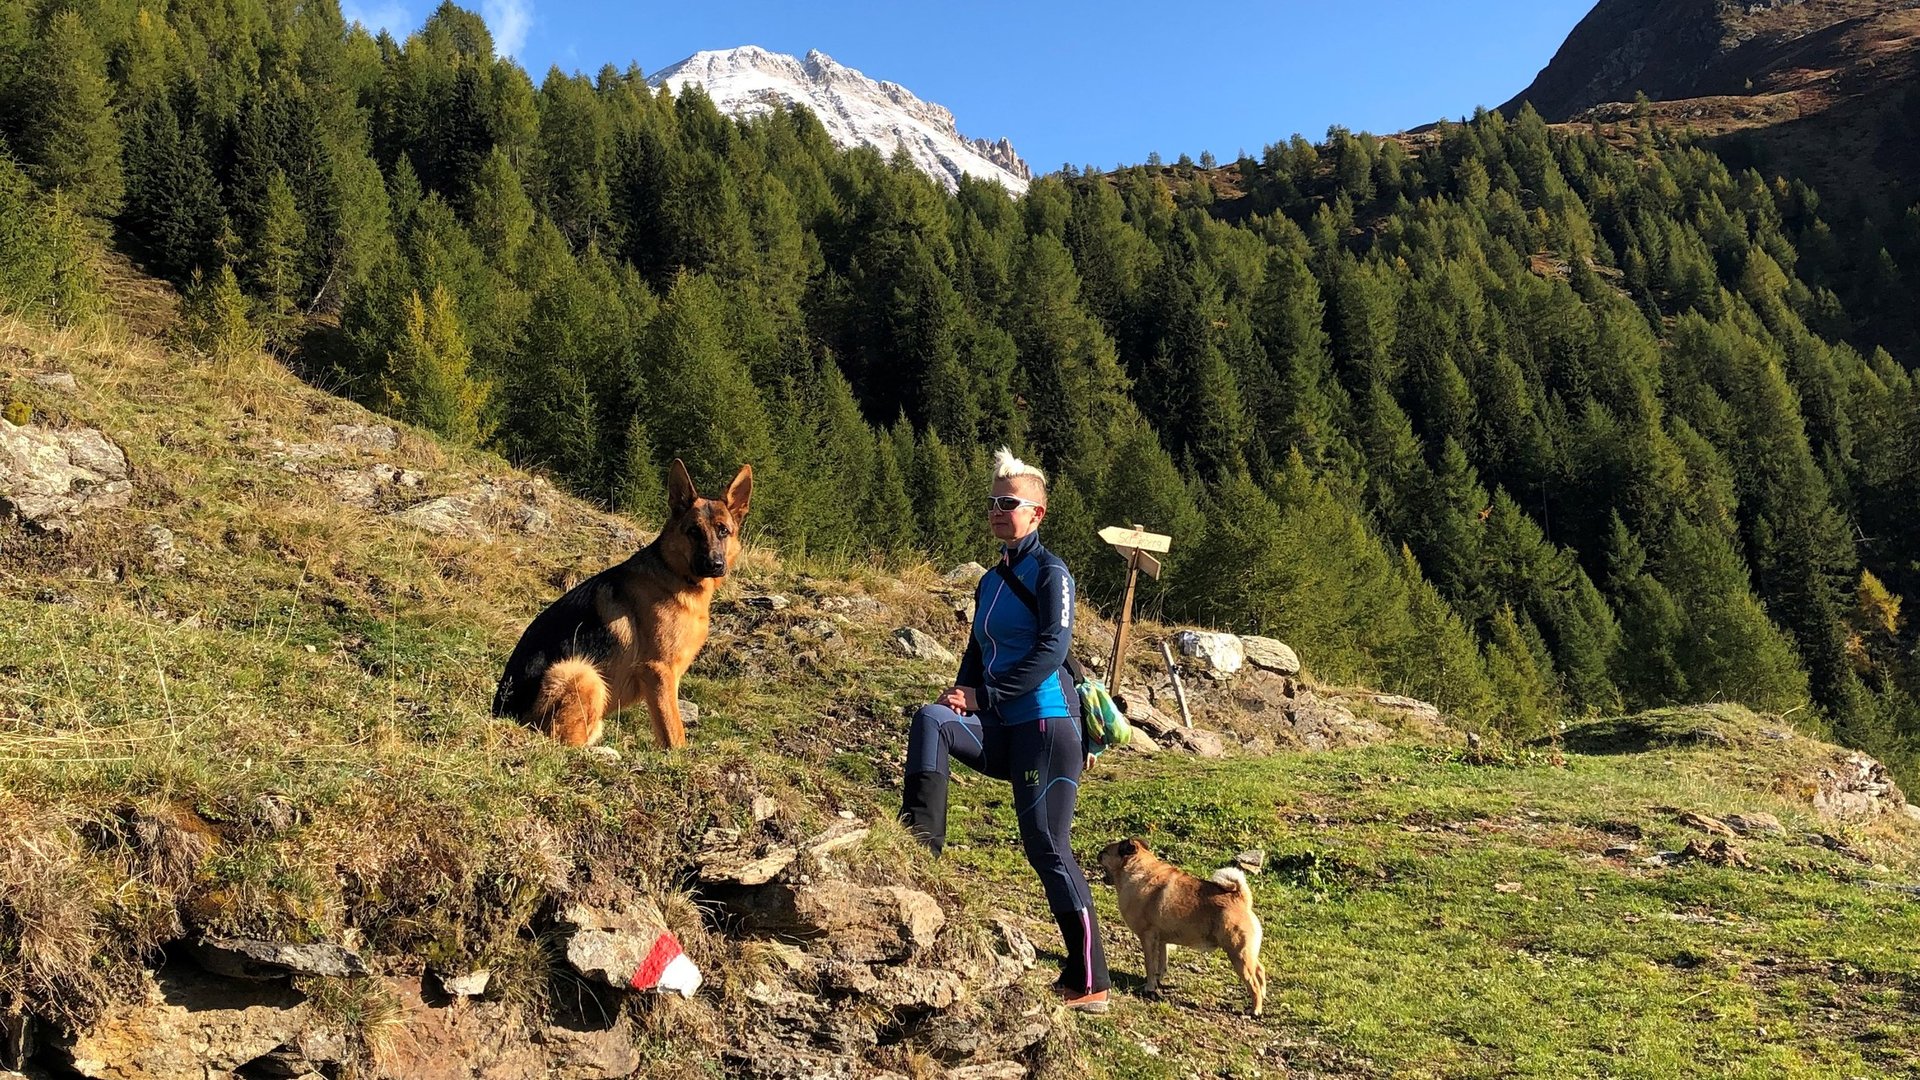 Pension Widmann hike Schneeberg with dog